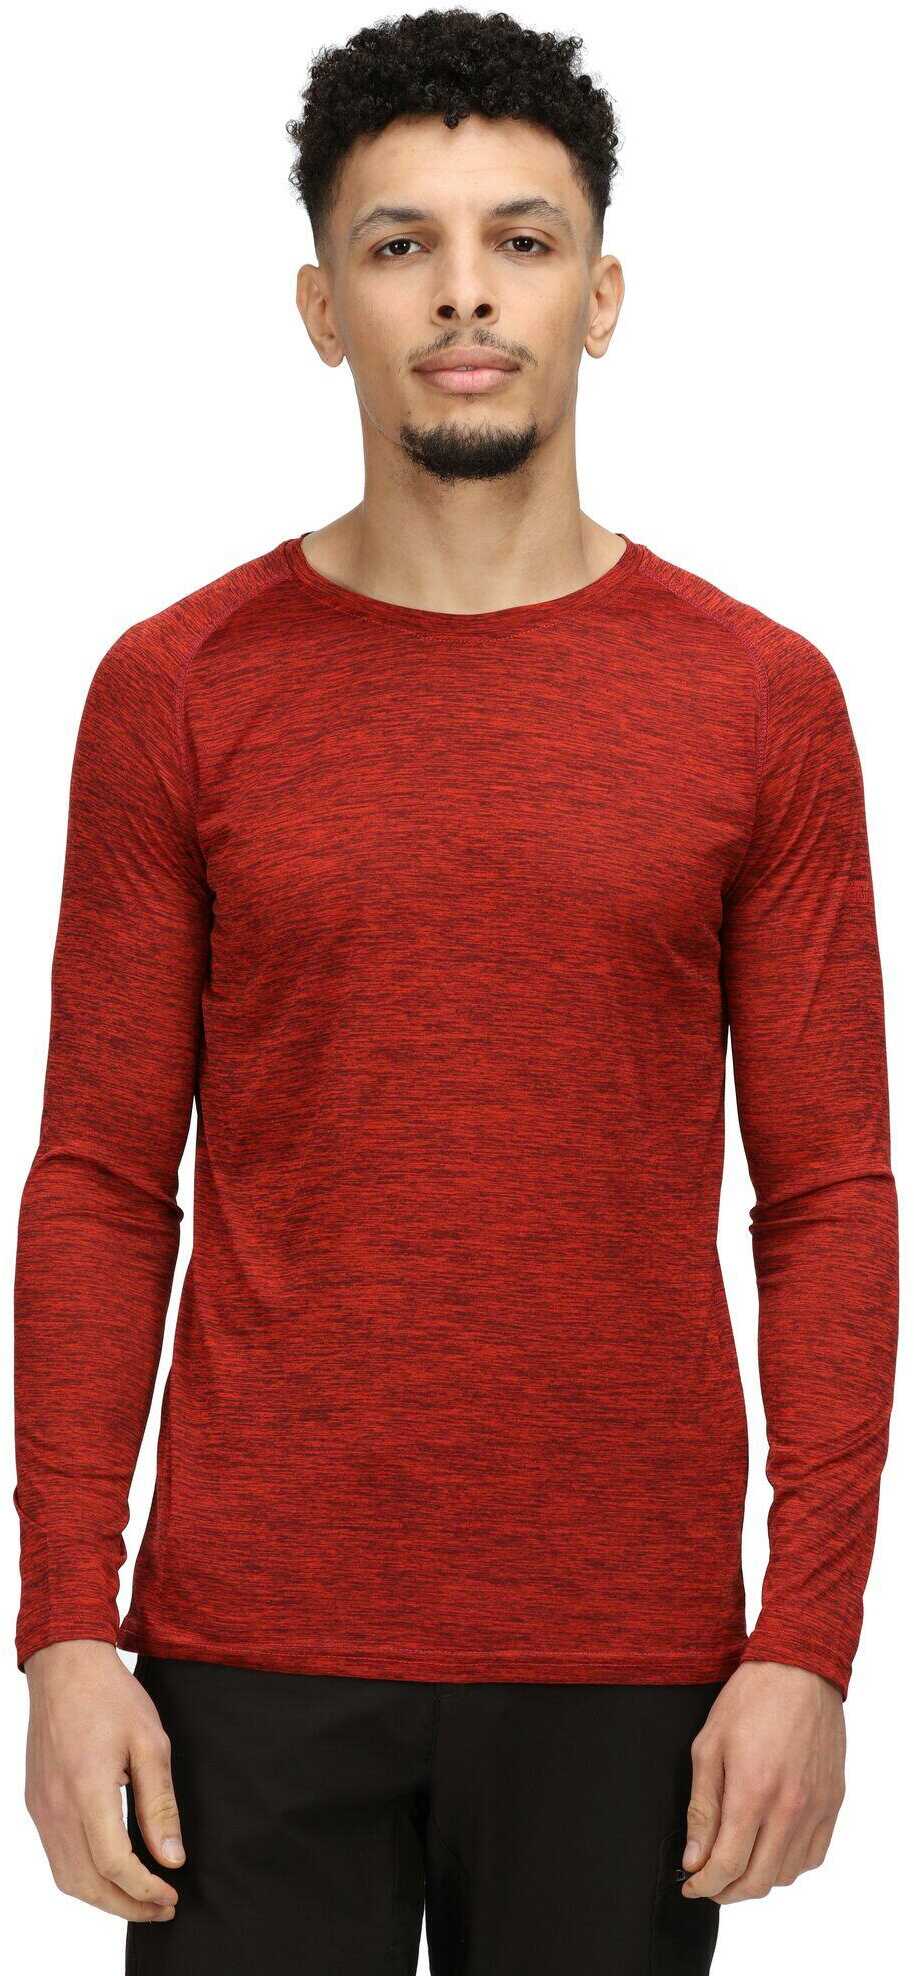 Męska koszulka z długim rękawem Burlow czerwona